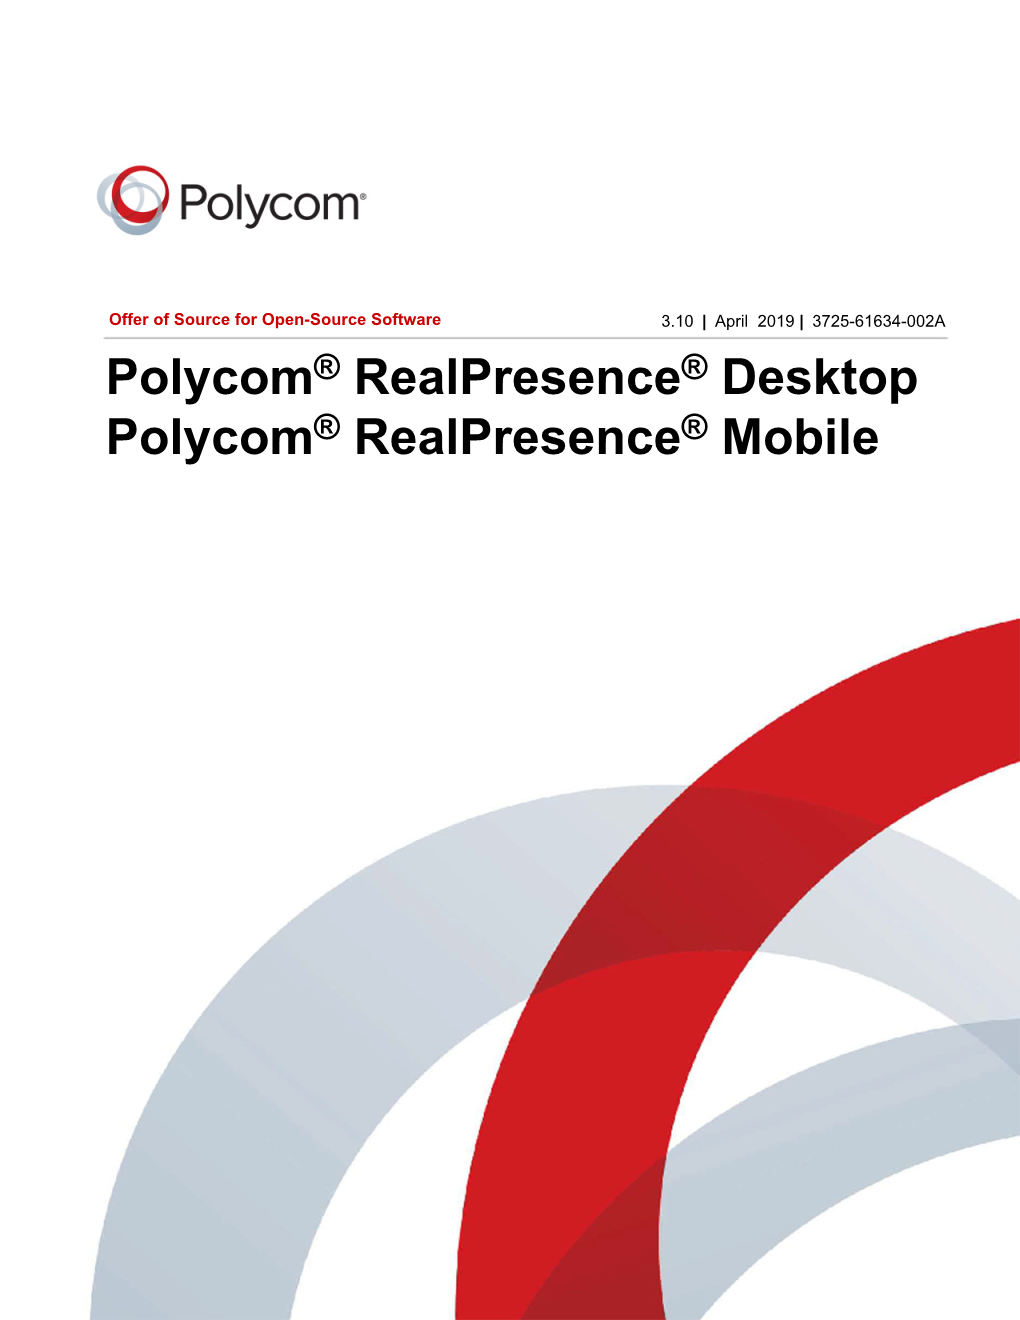 Polycom Realpresence Desktop and Realpresence Mobile Offer of Source for Open-Source Software 3.10